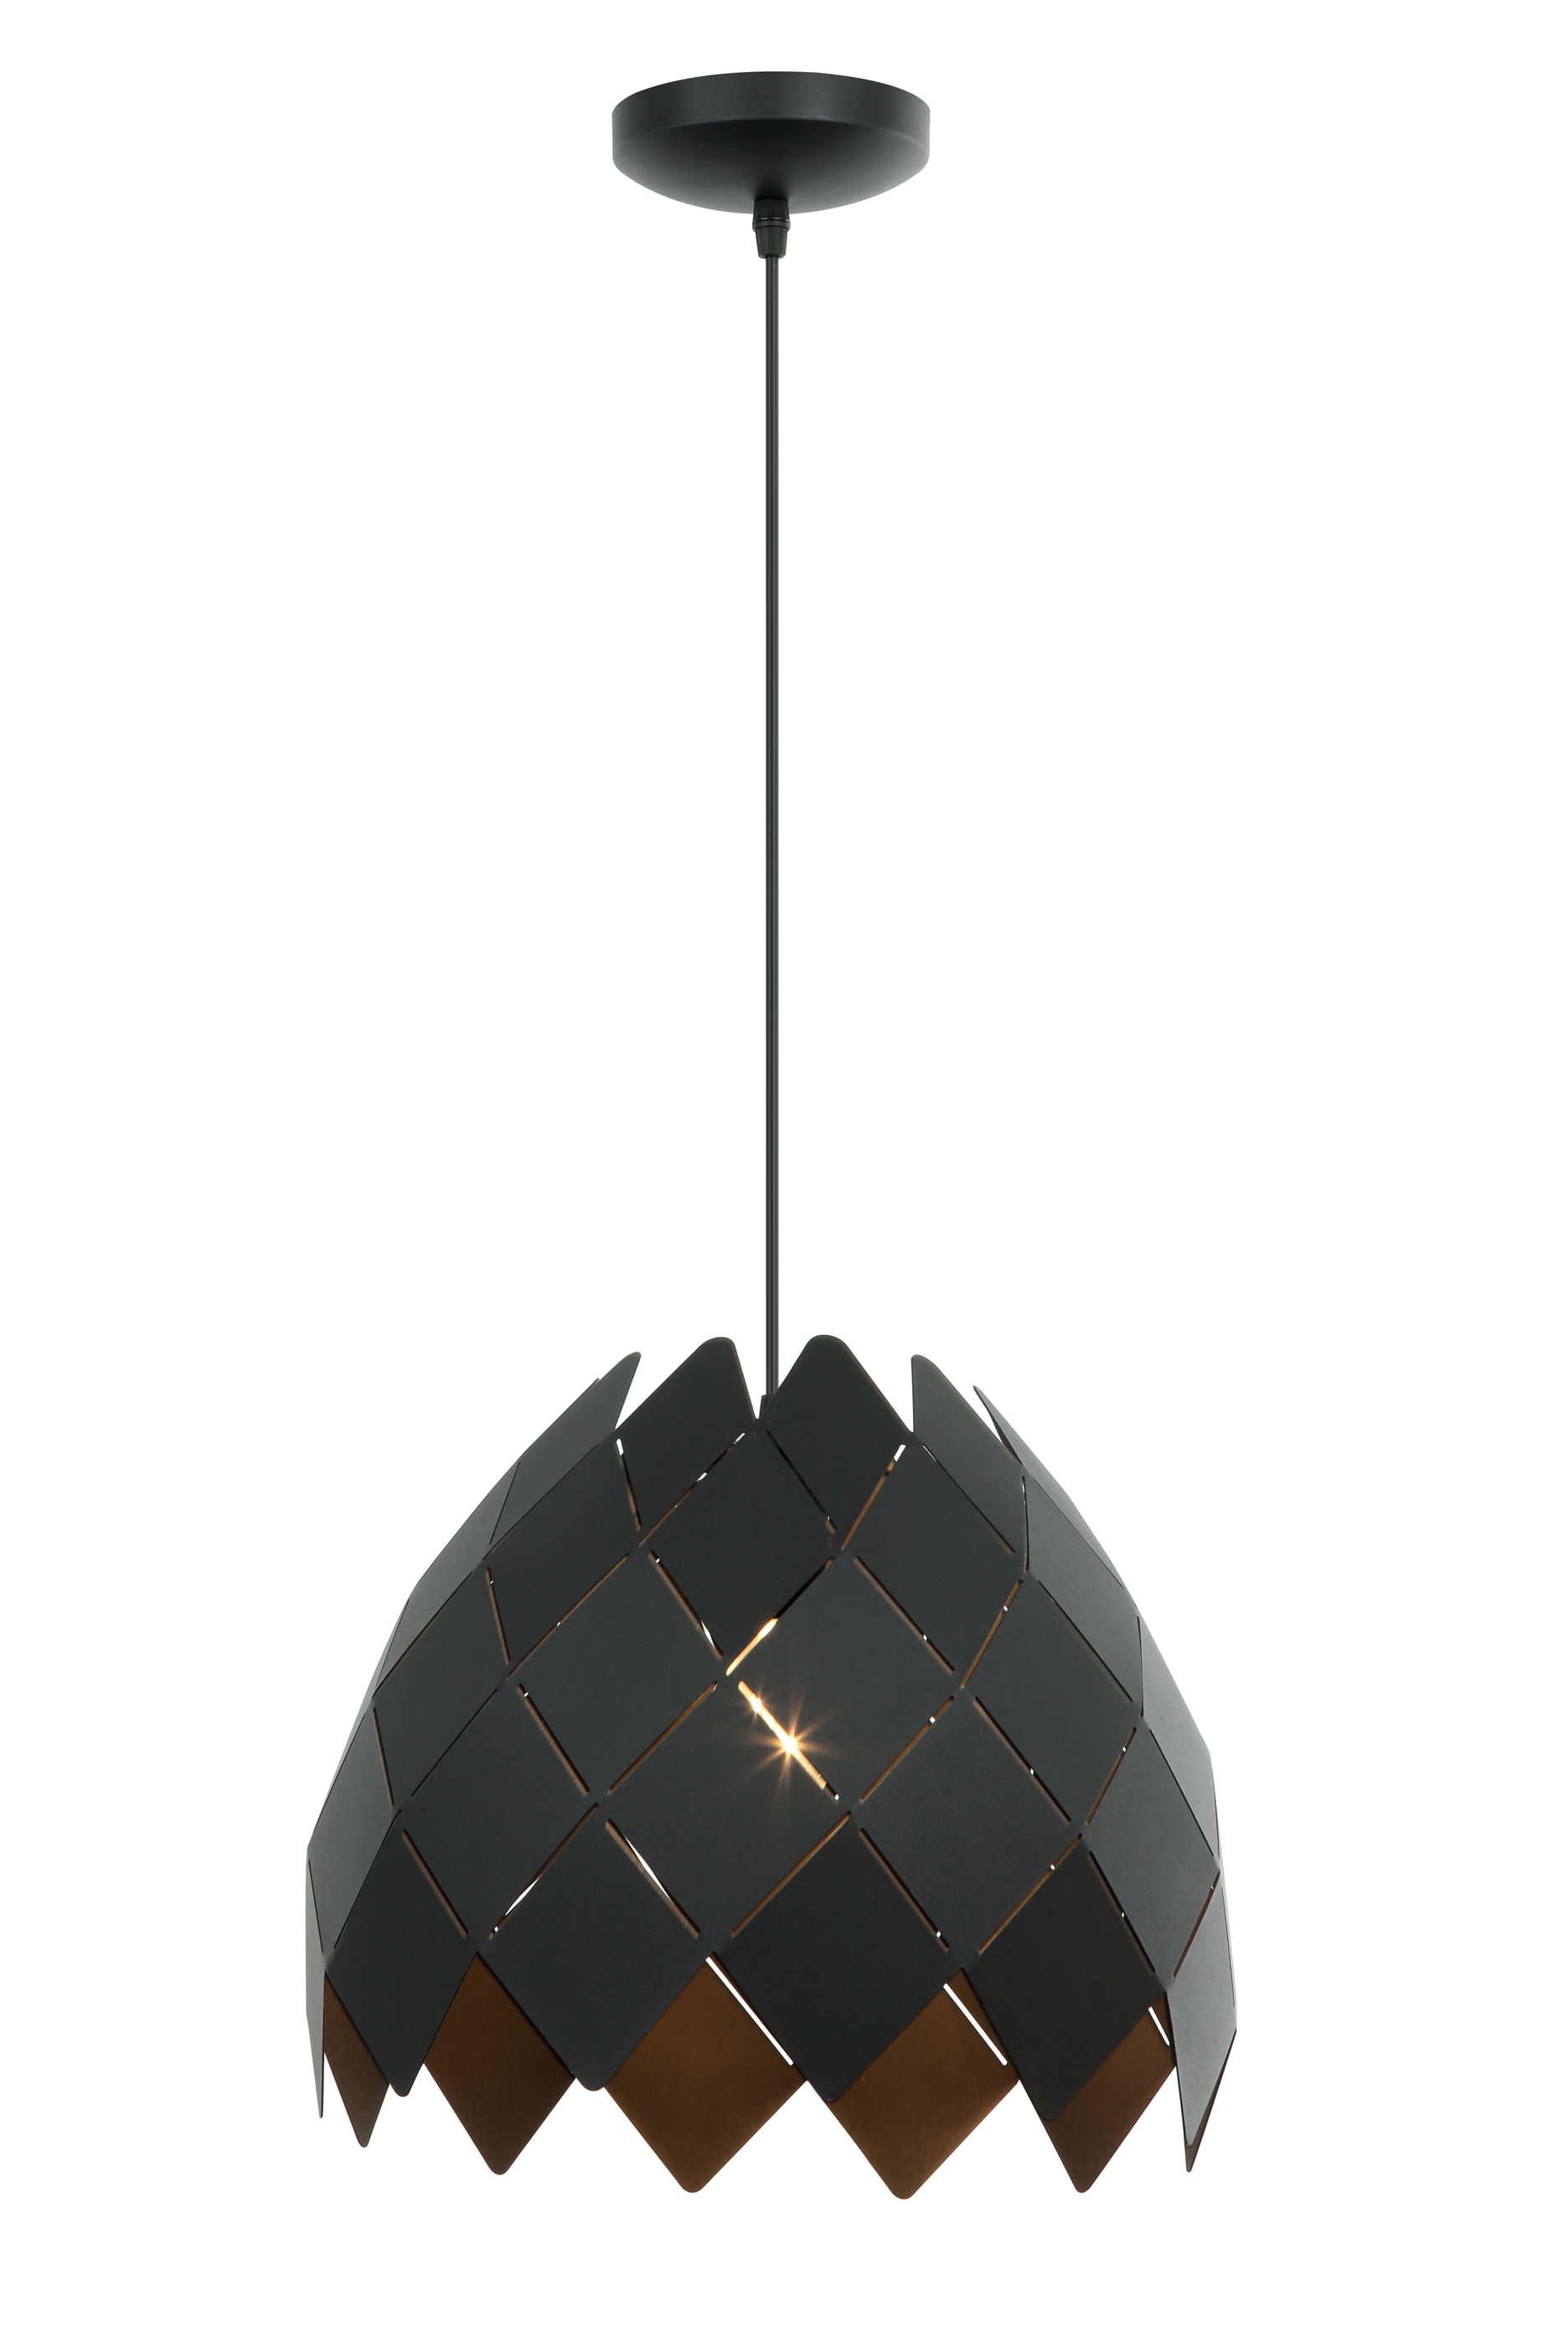 decorative modern pendant lighting chandelier producer for dining room-1